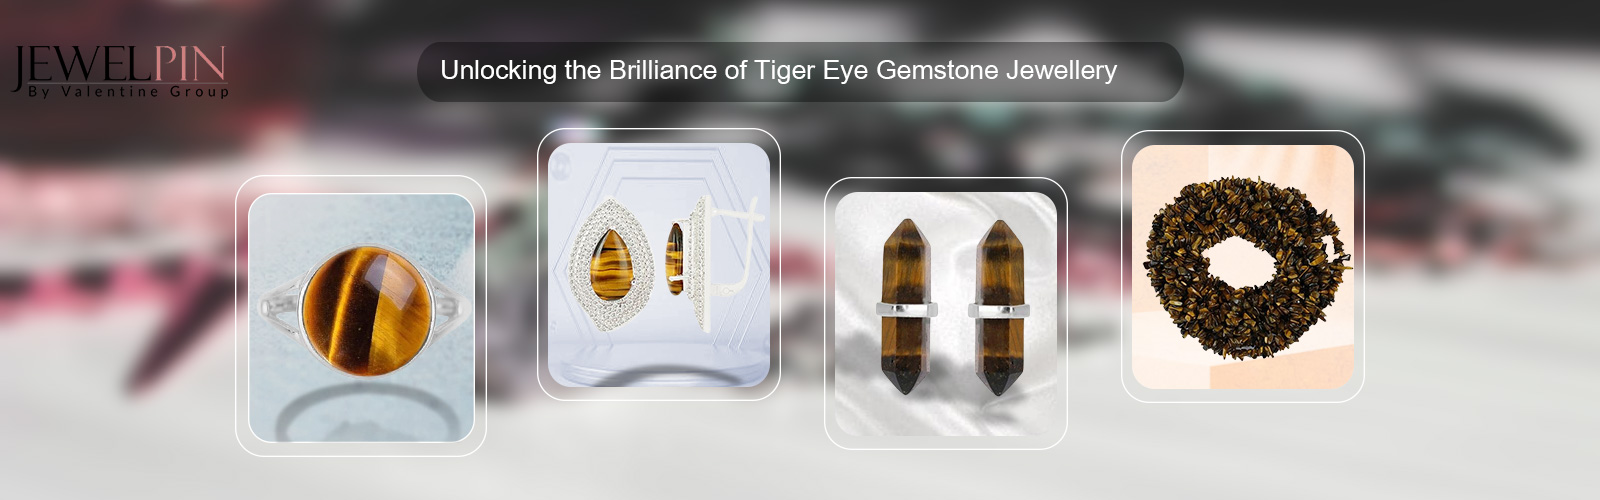 JewelPin - Unlocking the Brilliance of Tiger Eye Gemstone Jewellery